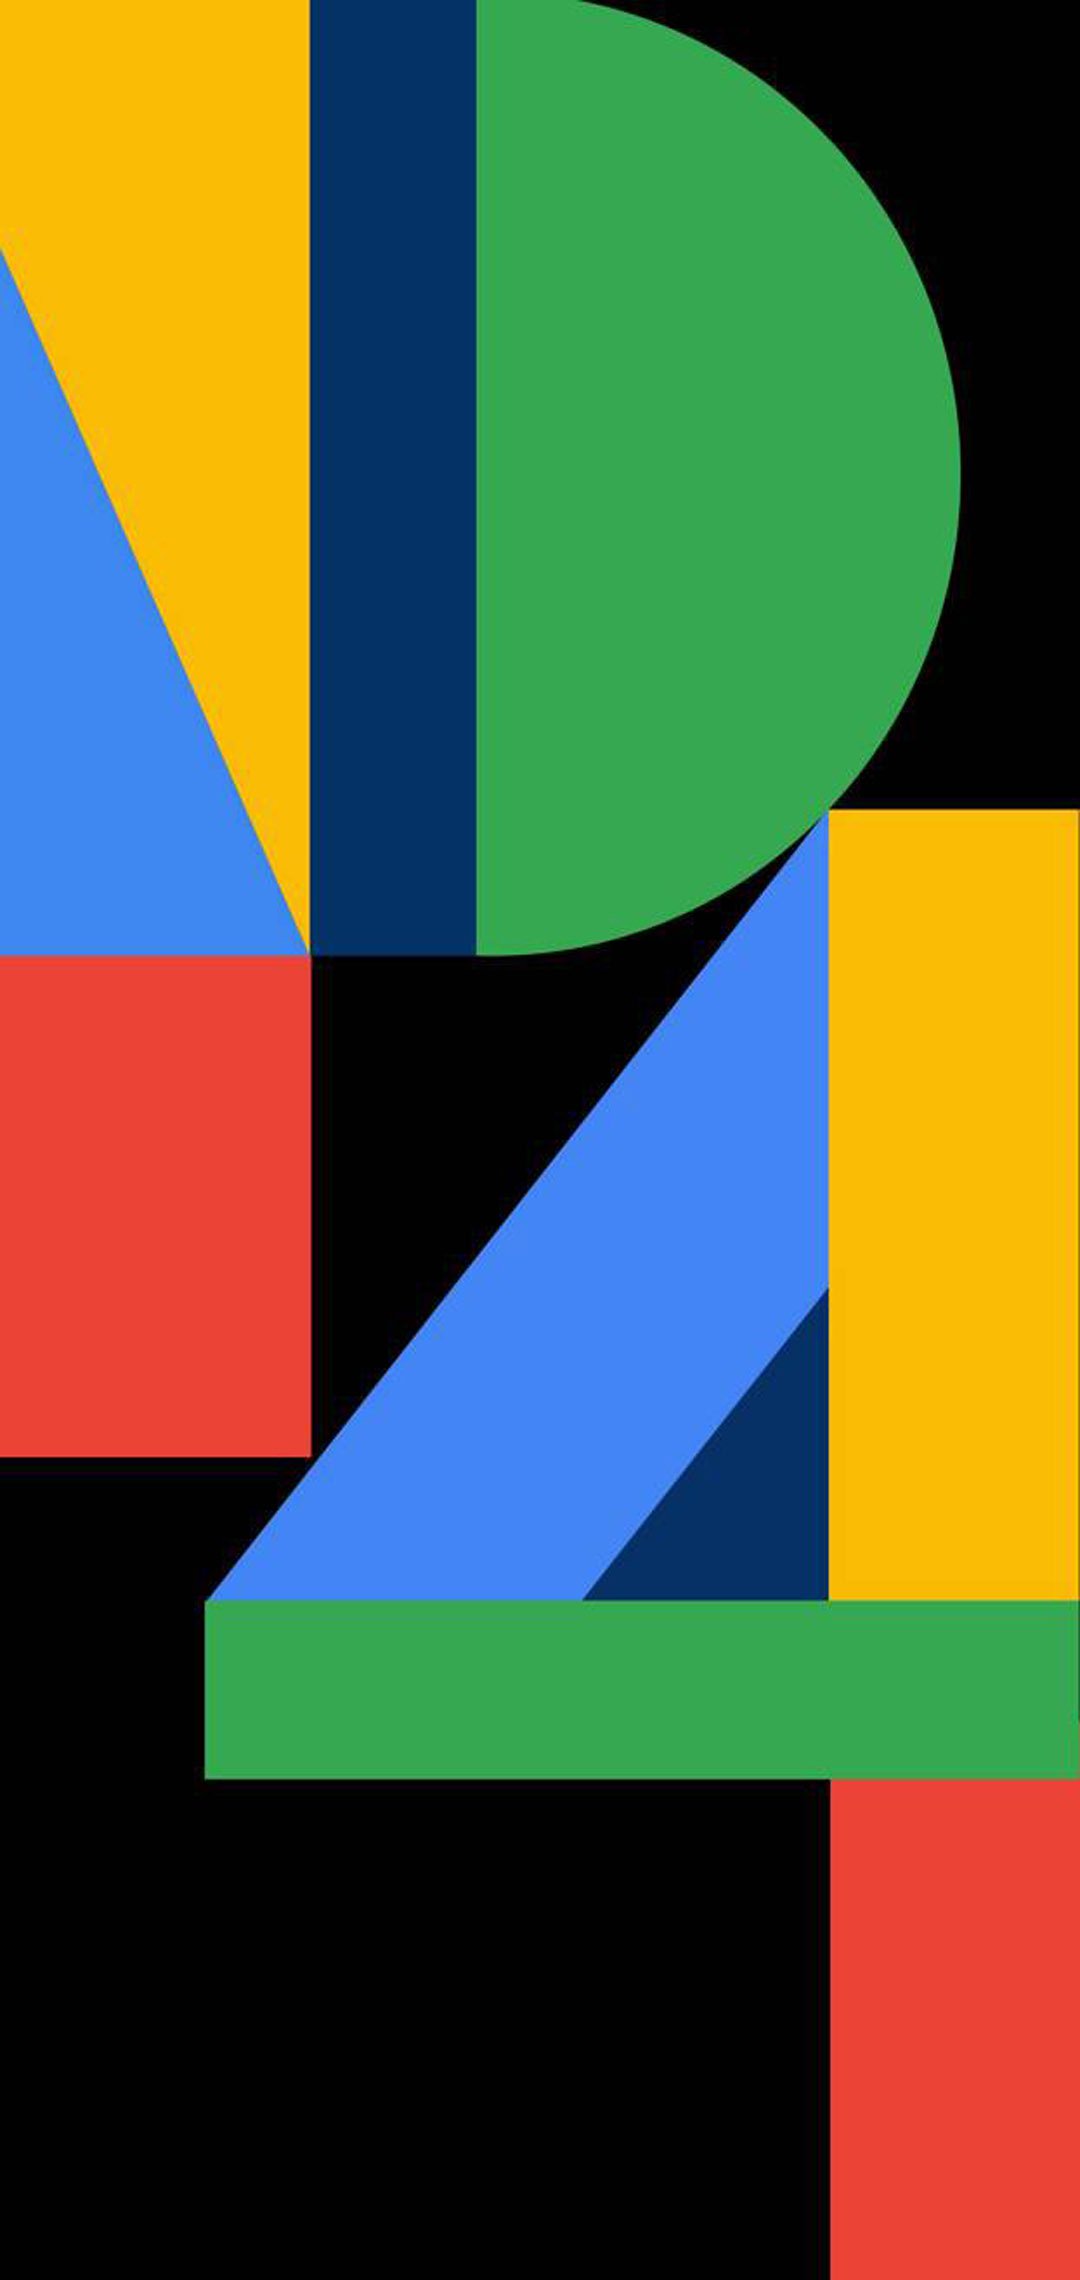 pixel wallpaper,blue,green,red,orange,graphic design